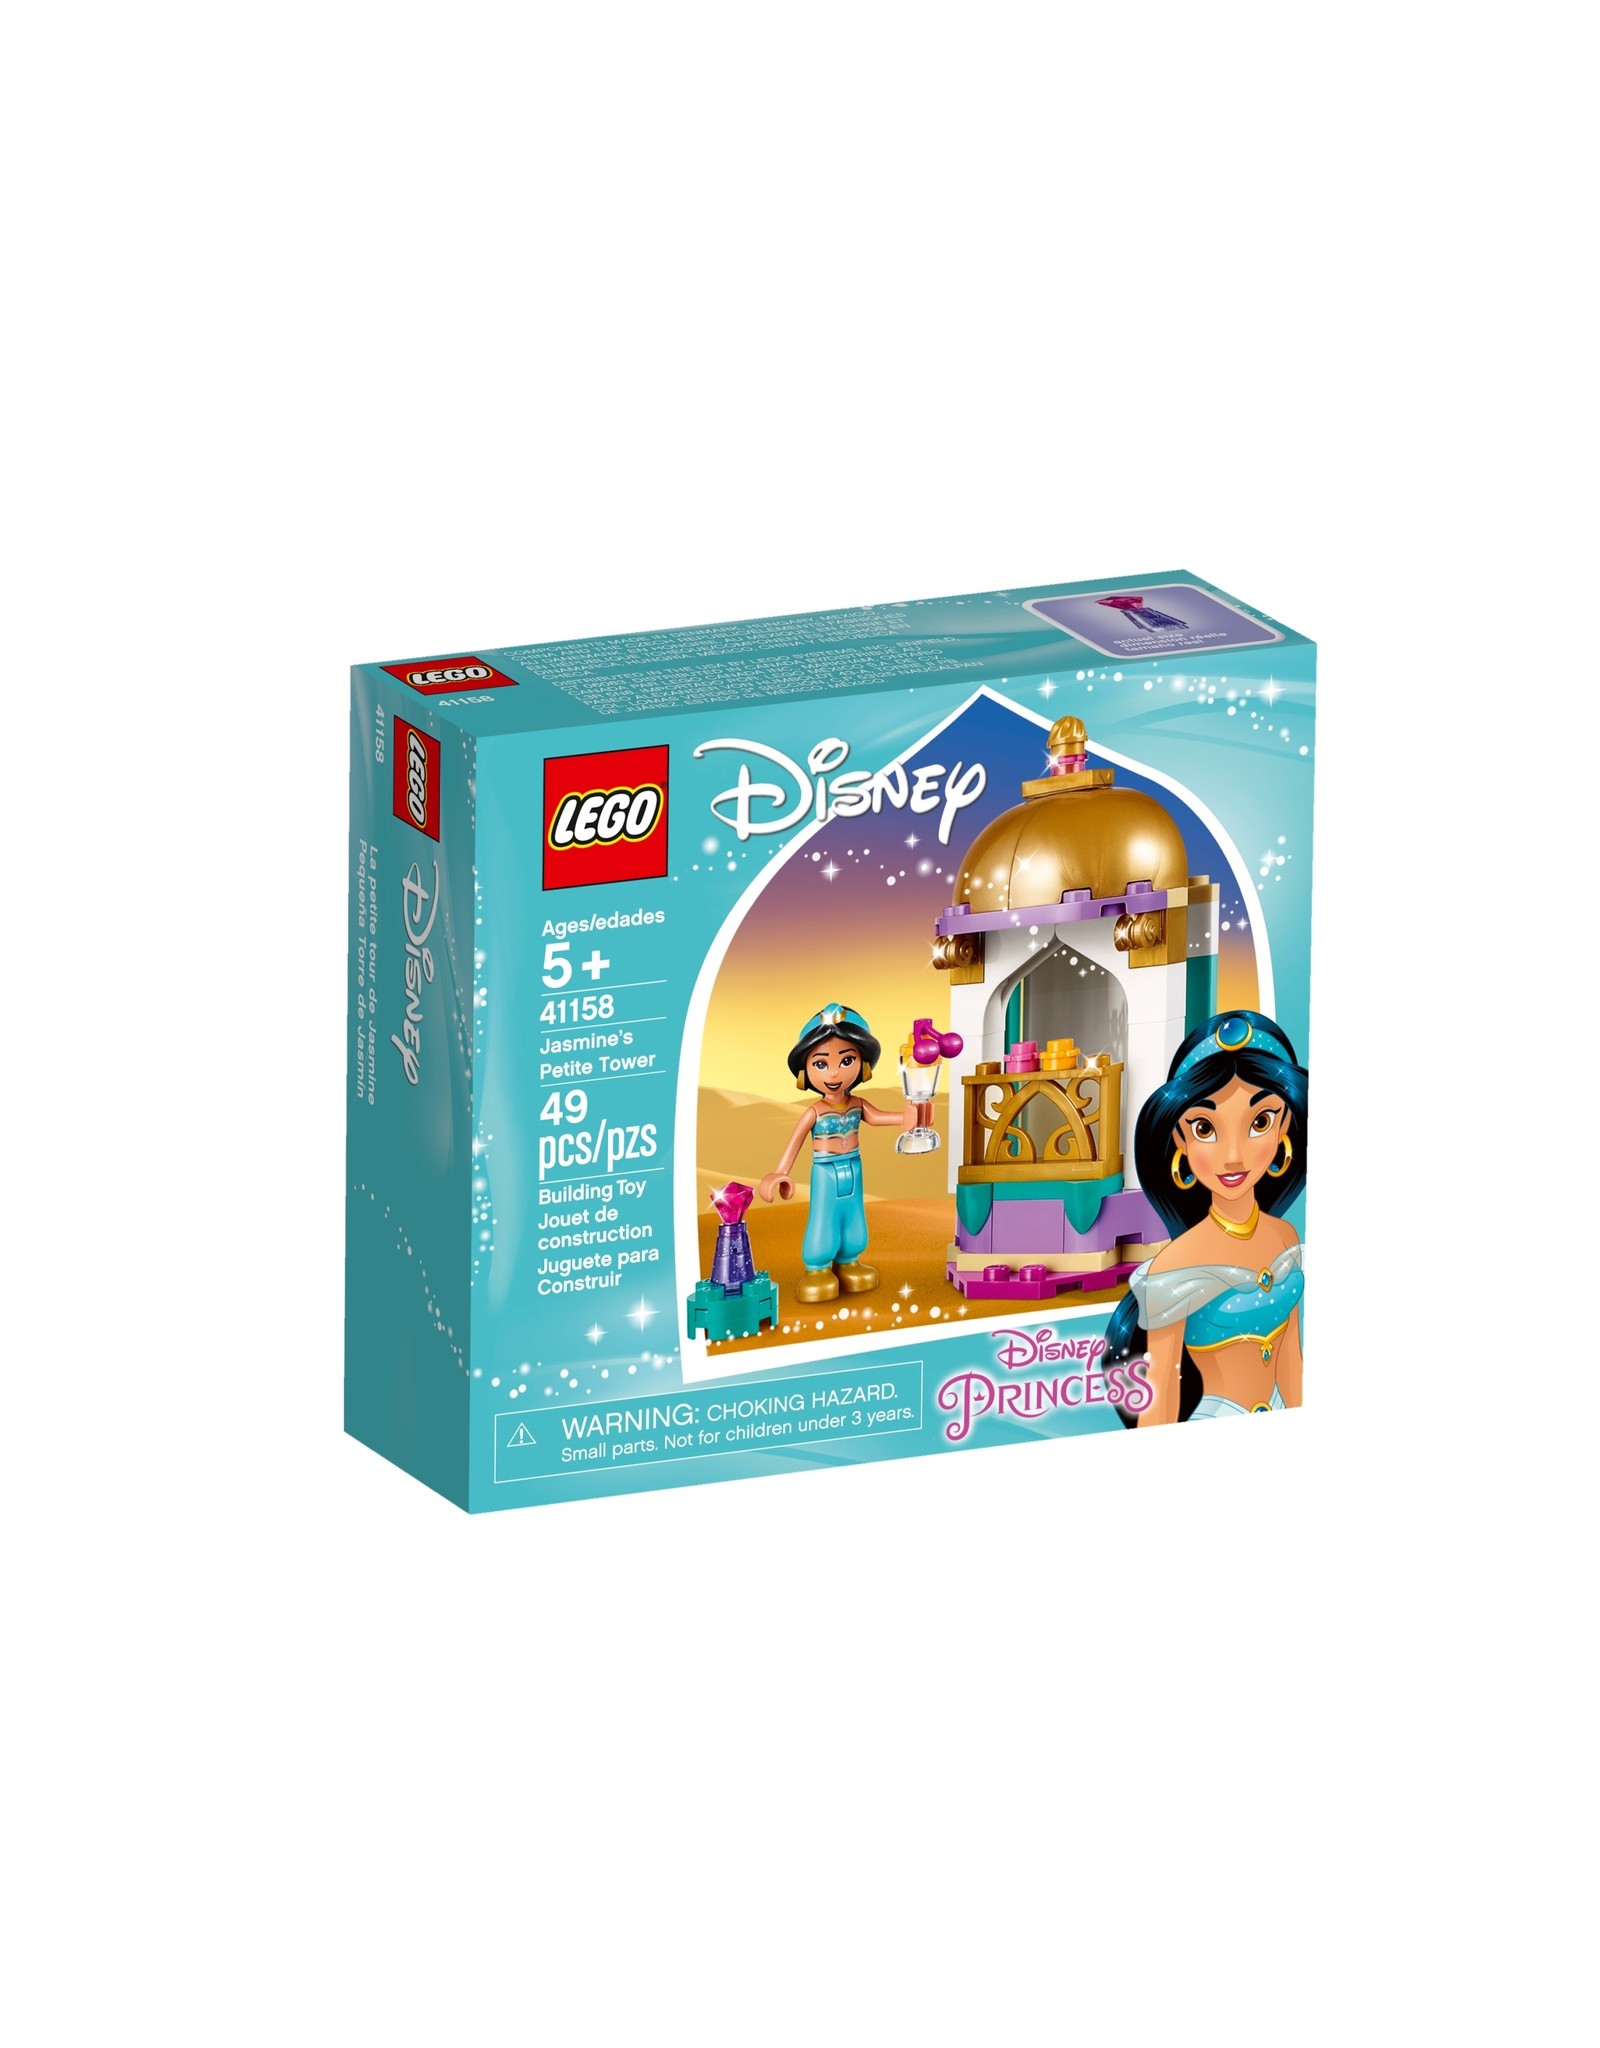 LEGO 41158 Disney Princess Jasmines Petite Tower 49pcs for sale online 